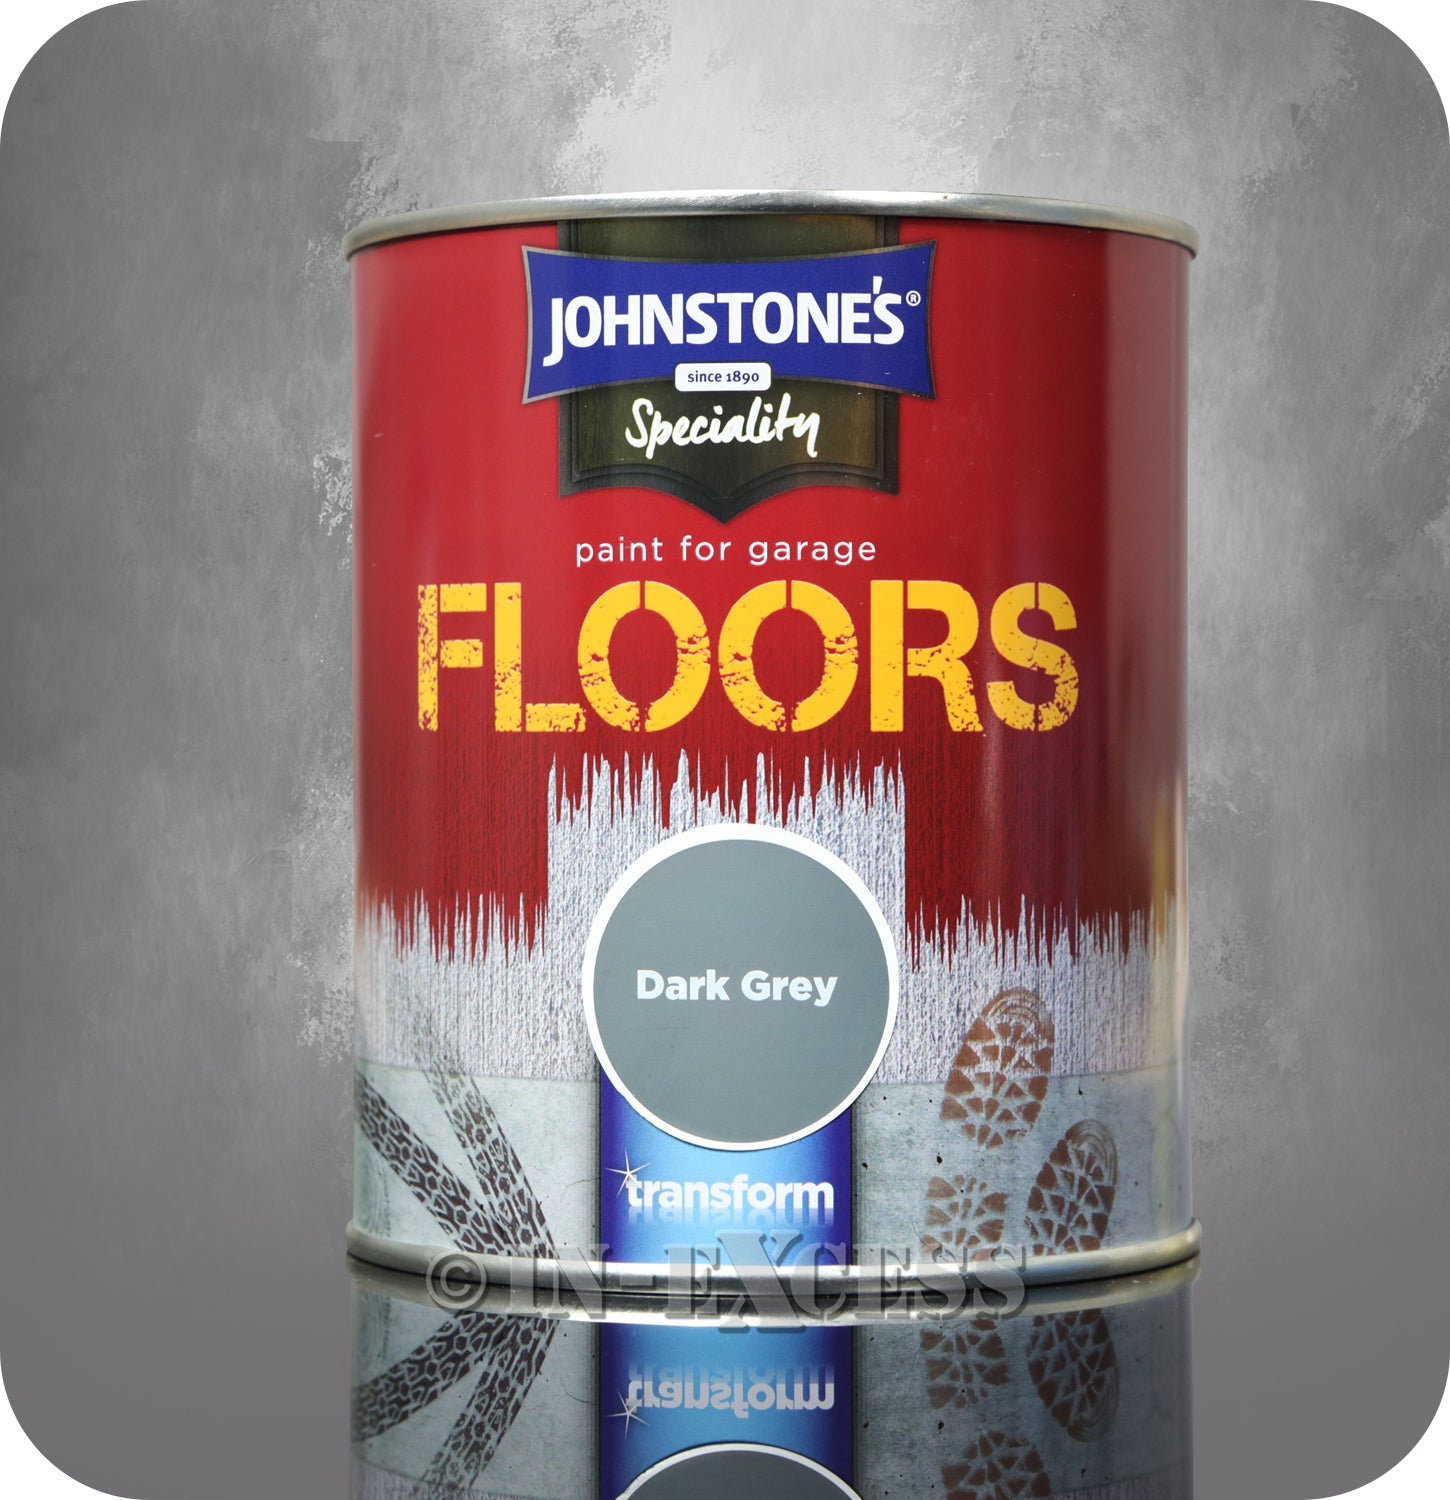 Johnstone's Speciality Paint for Garage Floors Dark Grey - 750ml